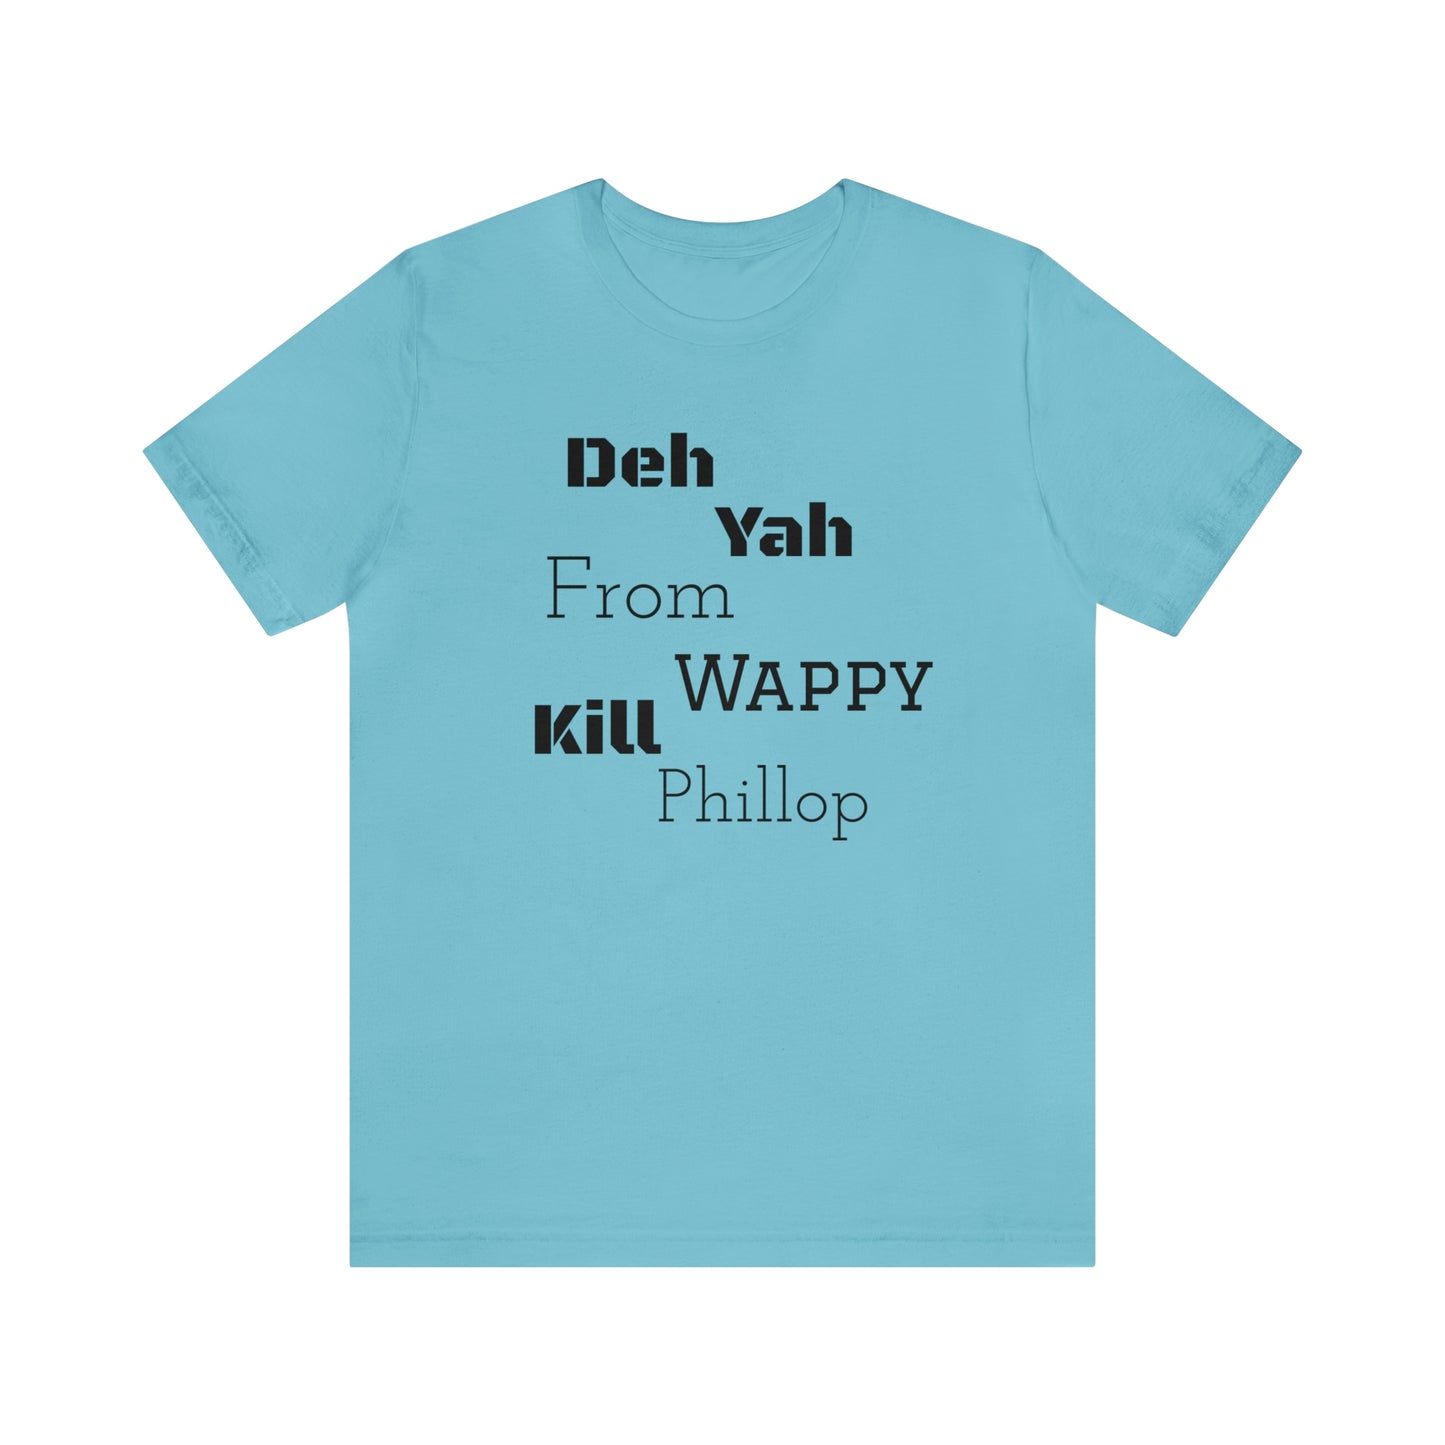 Carib "Wappy Kill Phillop" Unisex Short Sleeve Tee